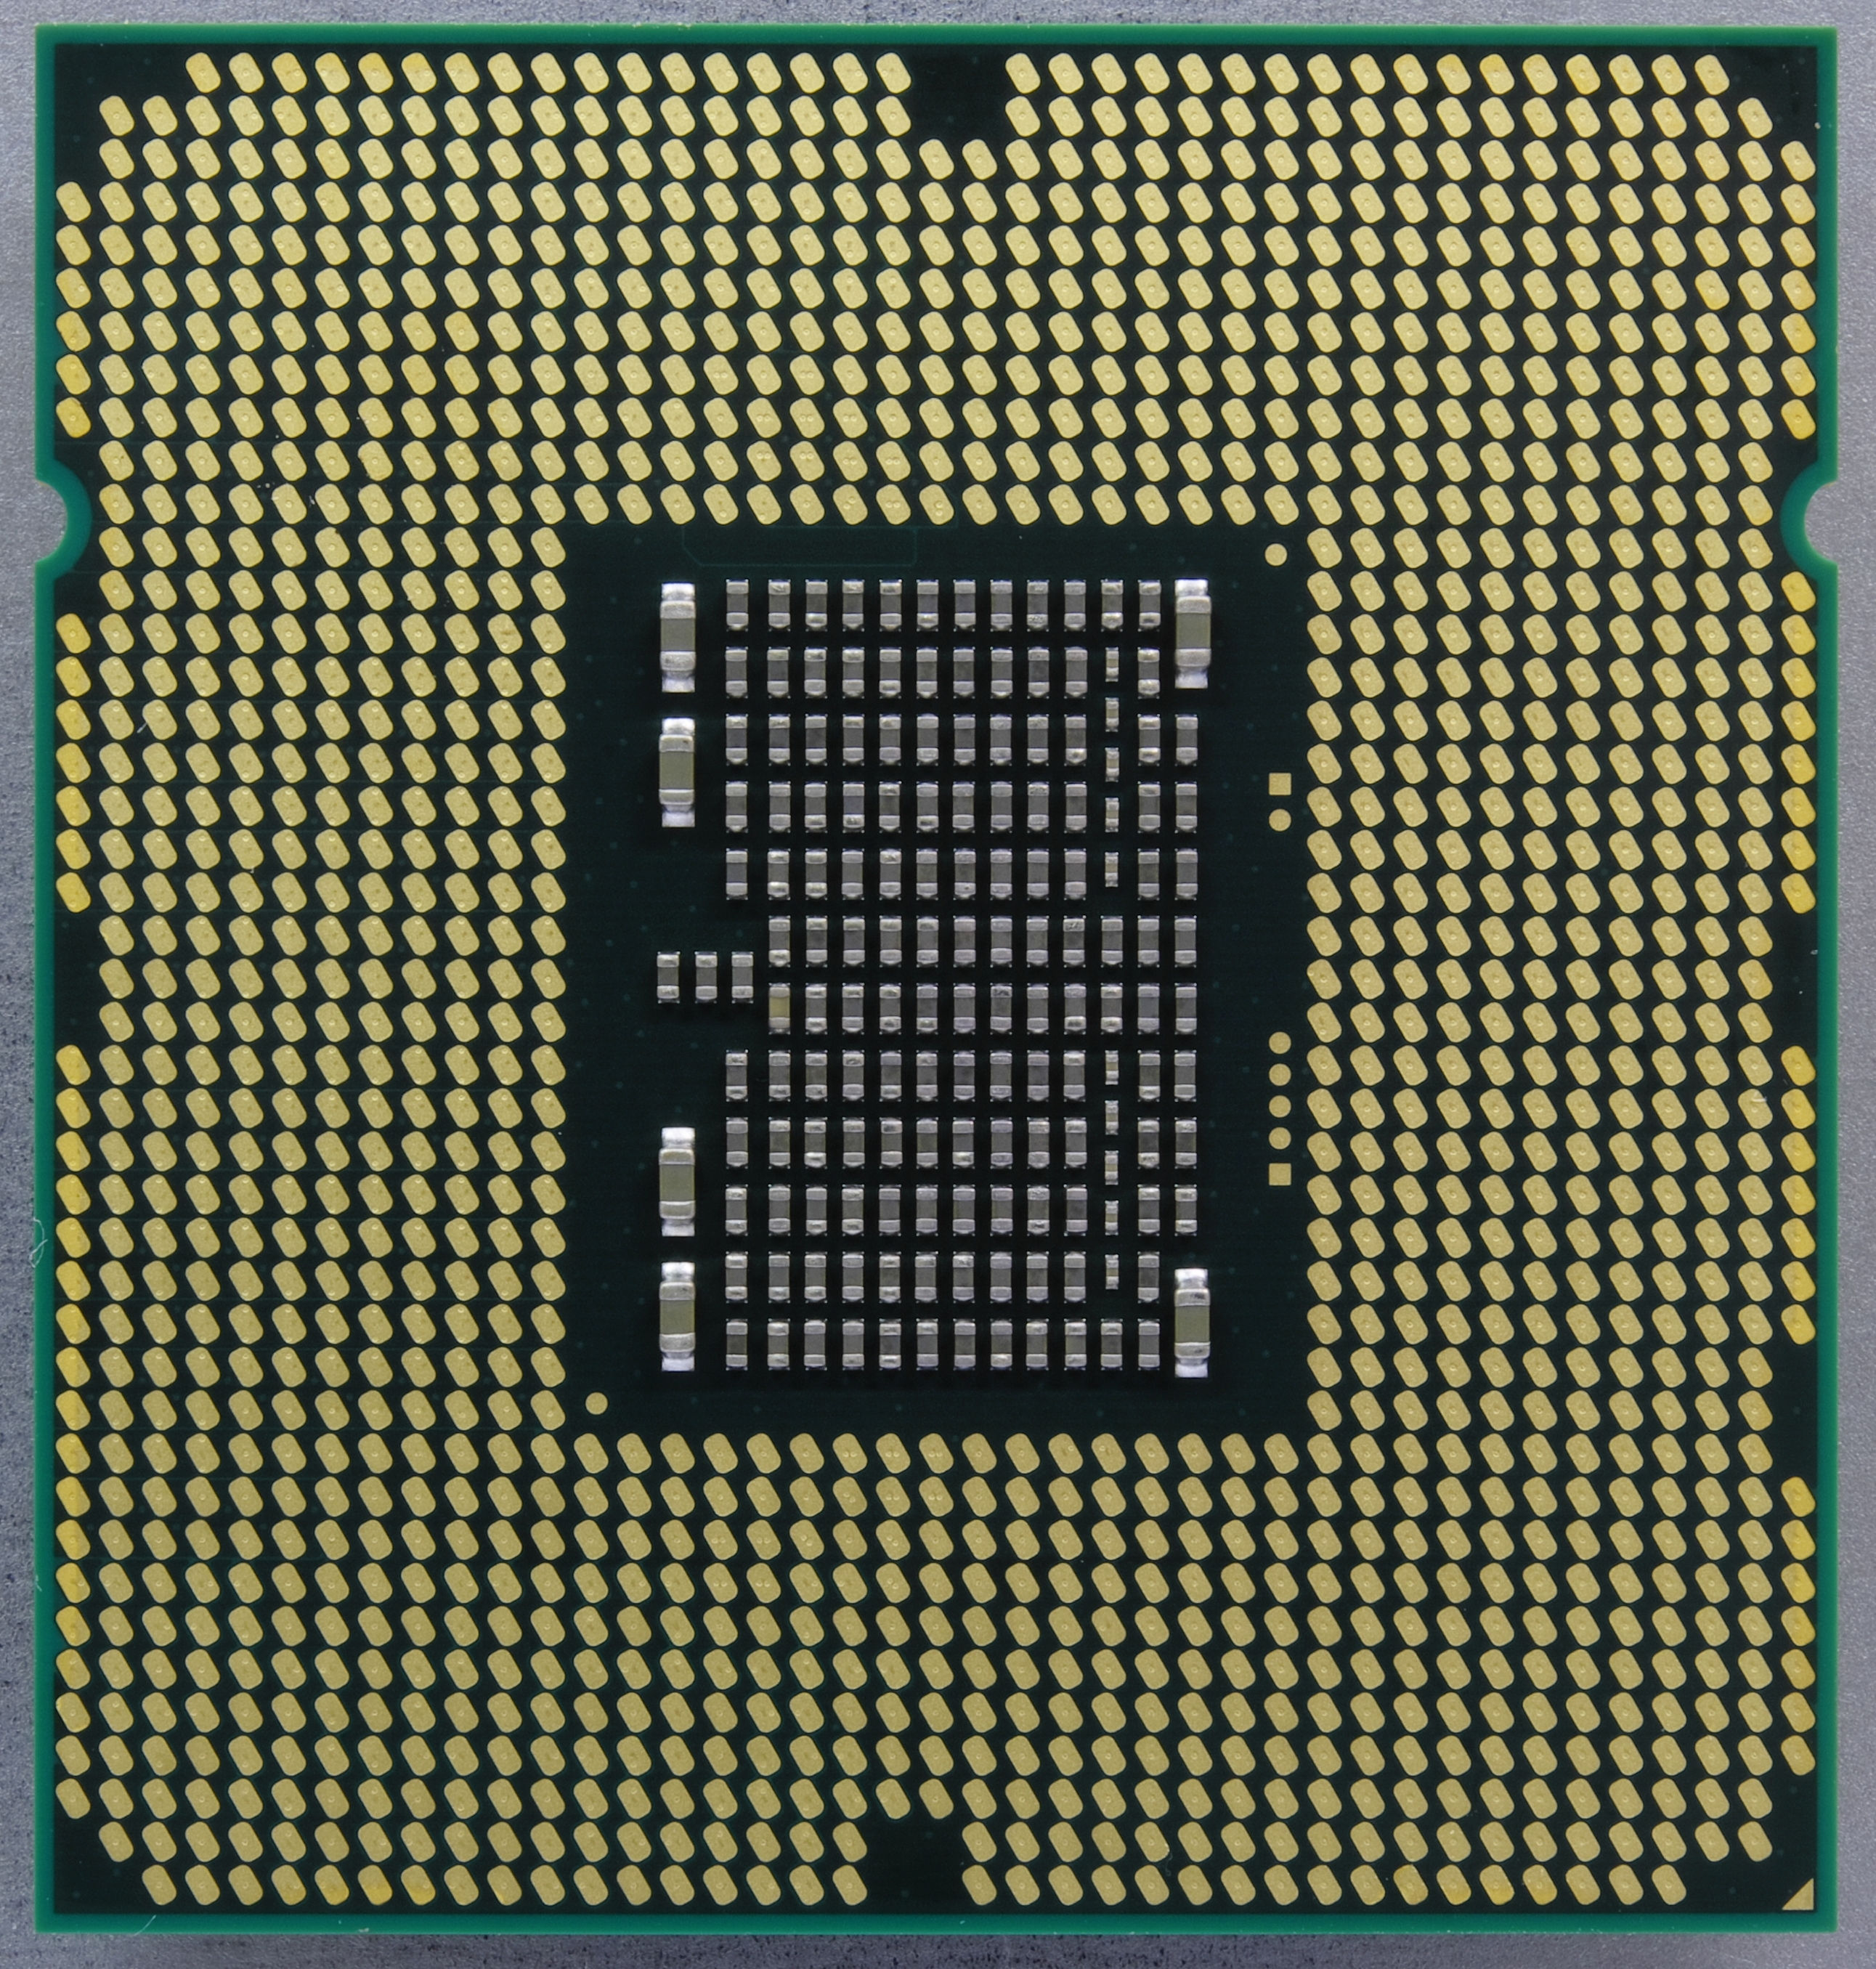 Intel extreme core i7 990x socket lga1366 bottom view imgp1394 smial wp